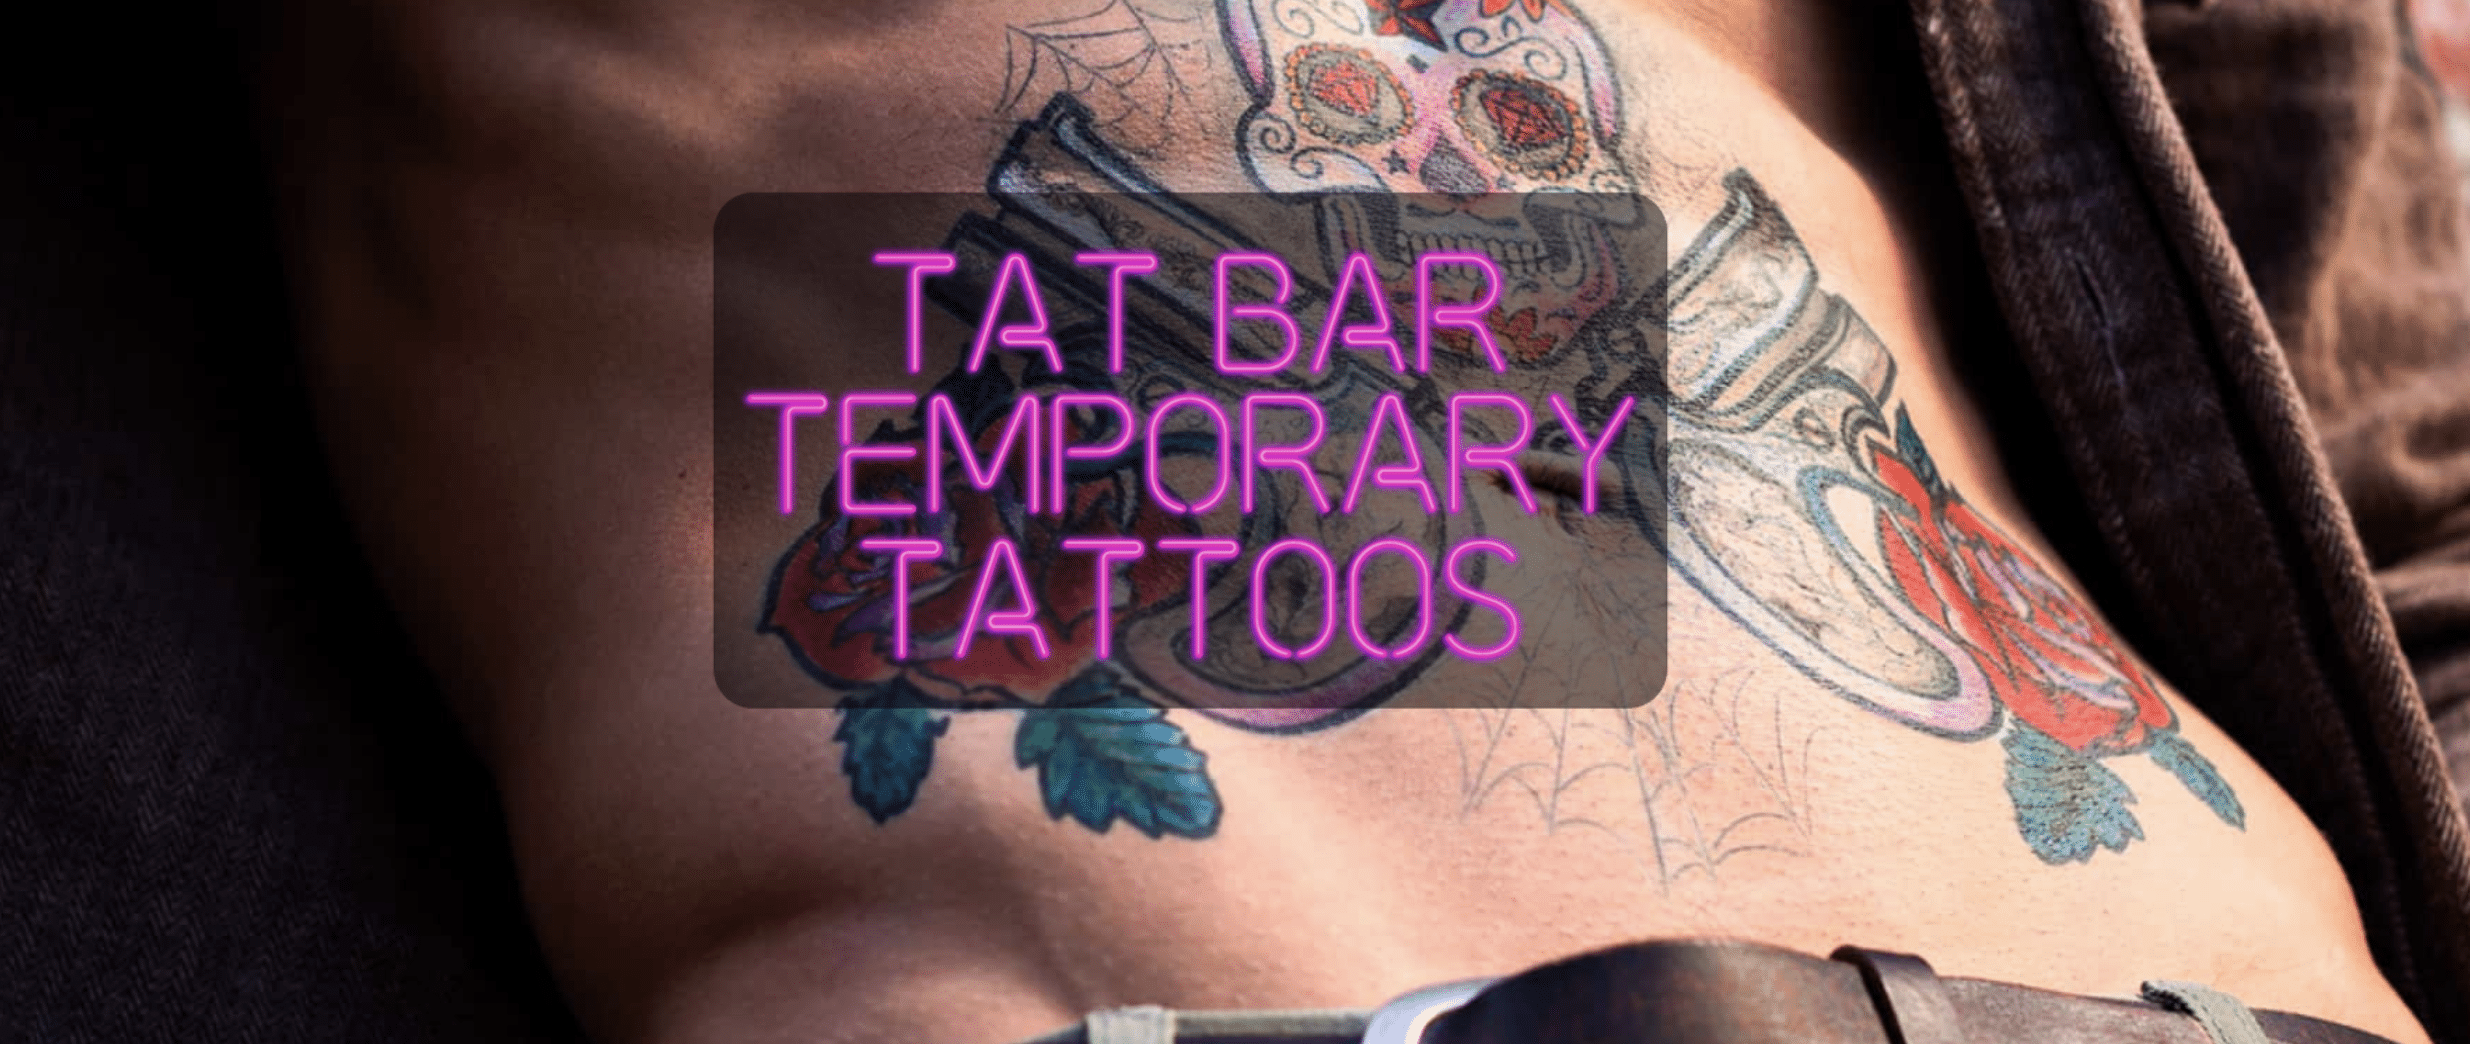 Temporary Tattoos at the Tat Bar Las Vegas